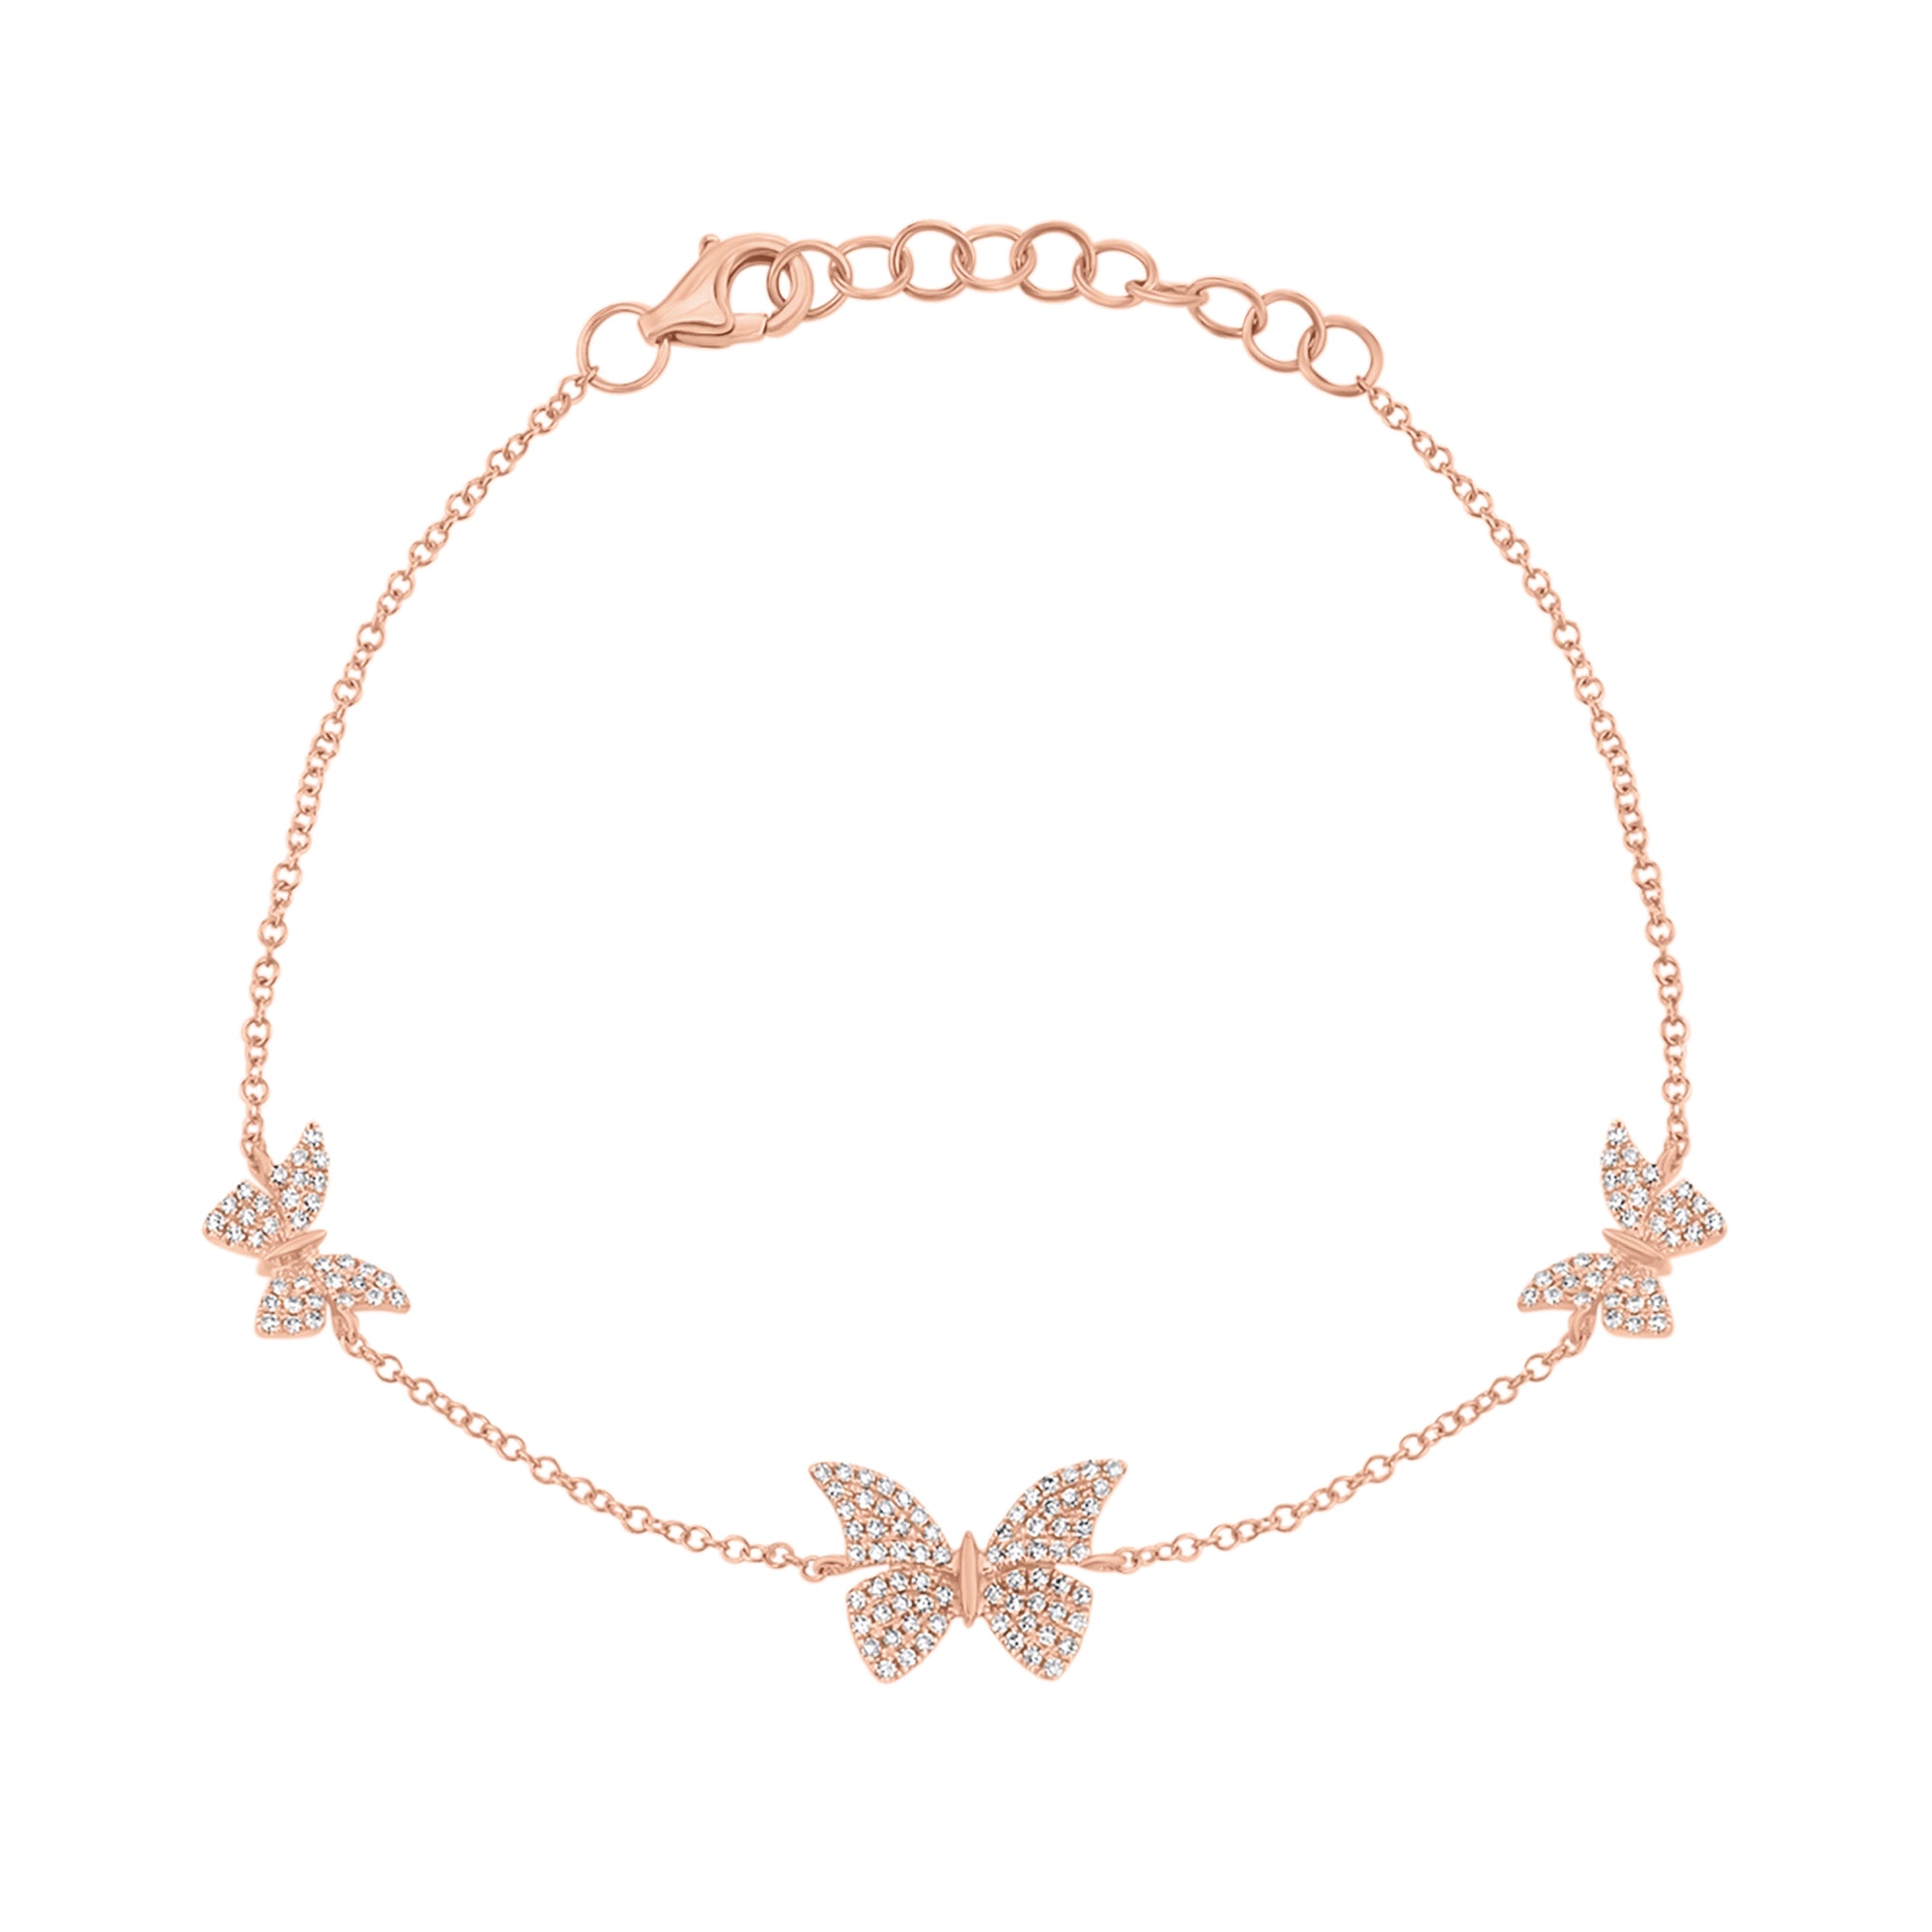 Diamond Butterflies Fashion Bracelet - 14K gold - 0.30 cts round diamonds